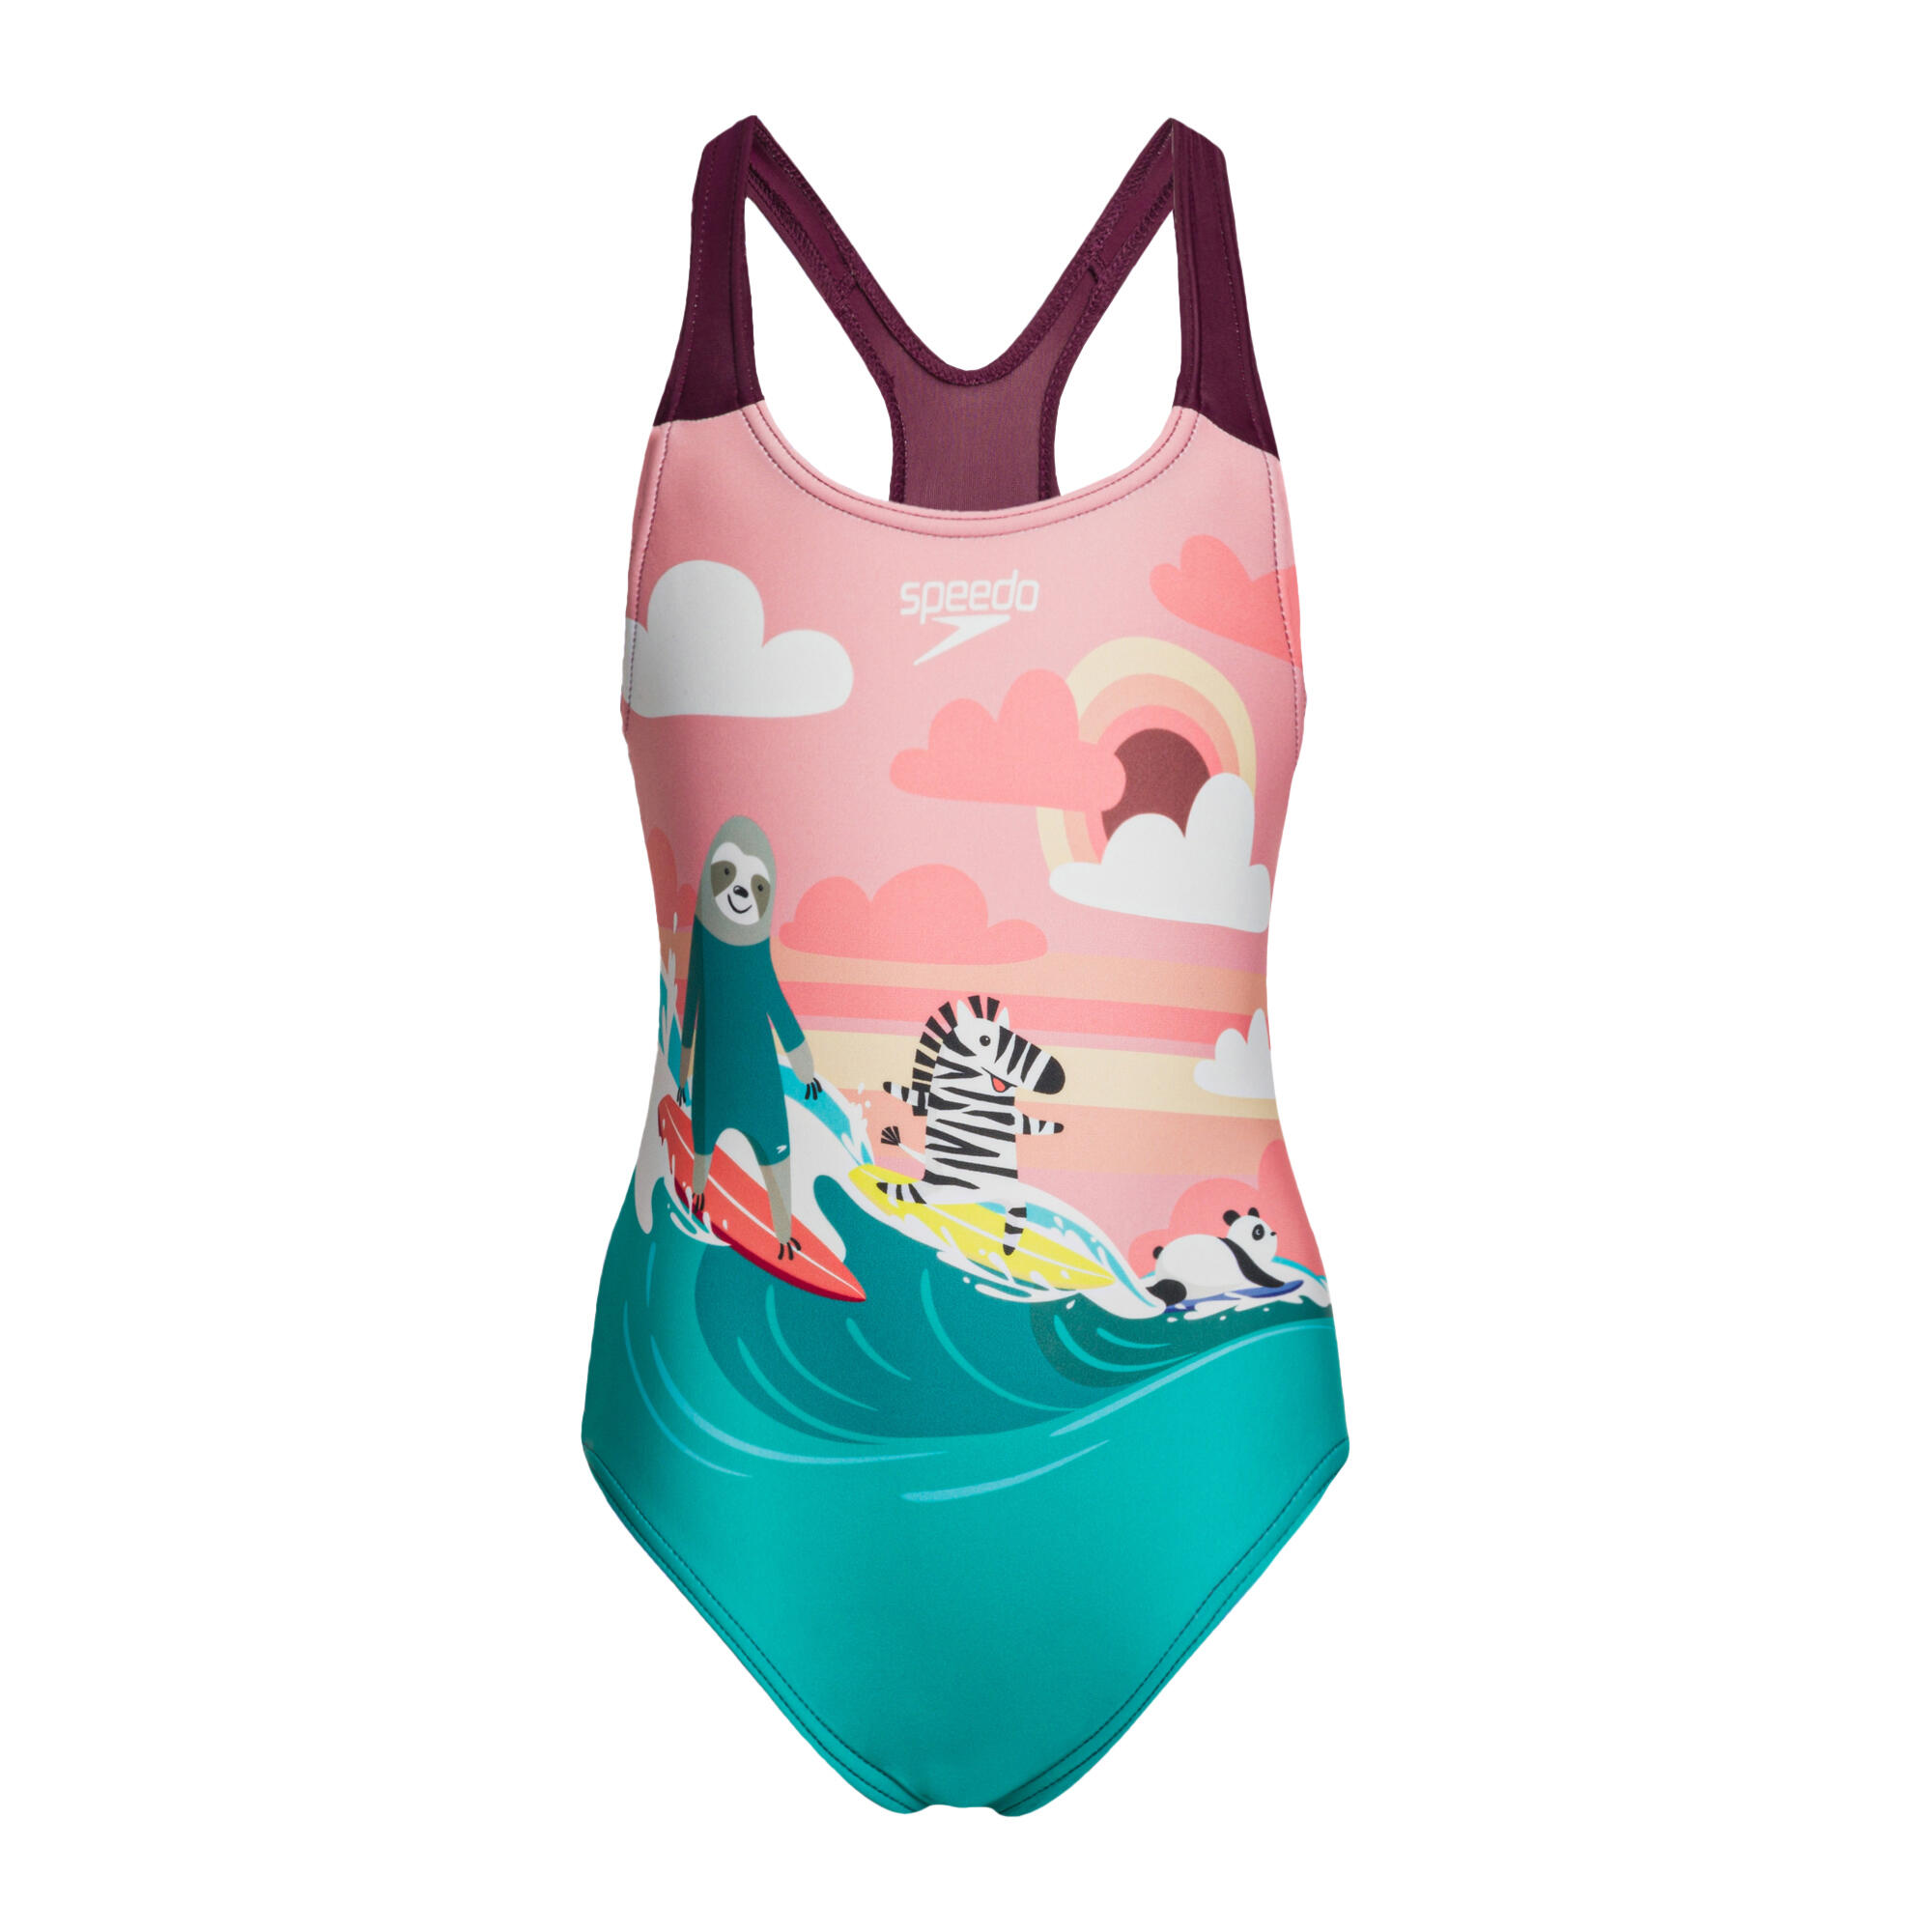 Speedo Junior Girls' Digital Printed Swimsuit - Pesca Pink 1/5